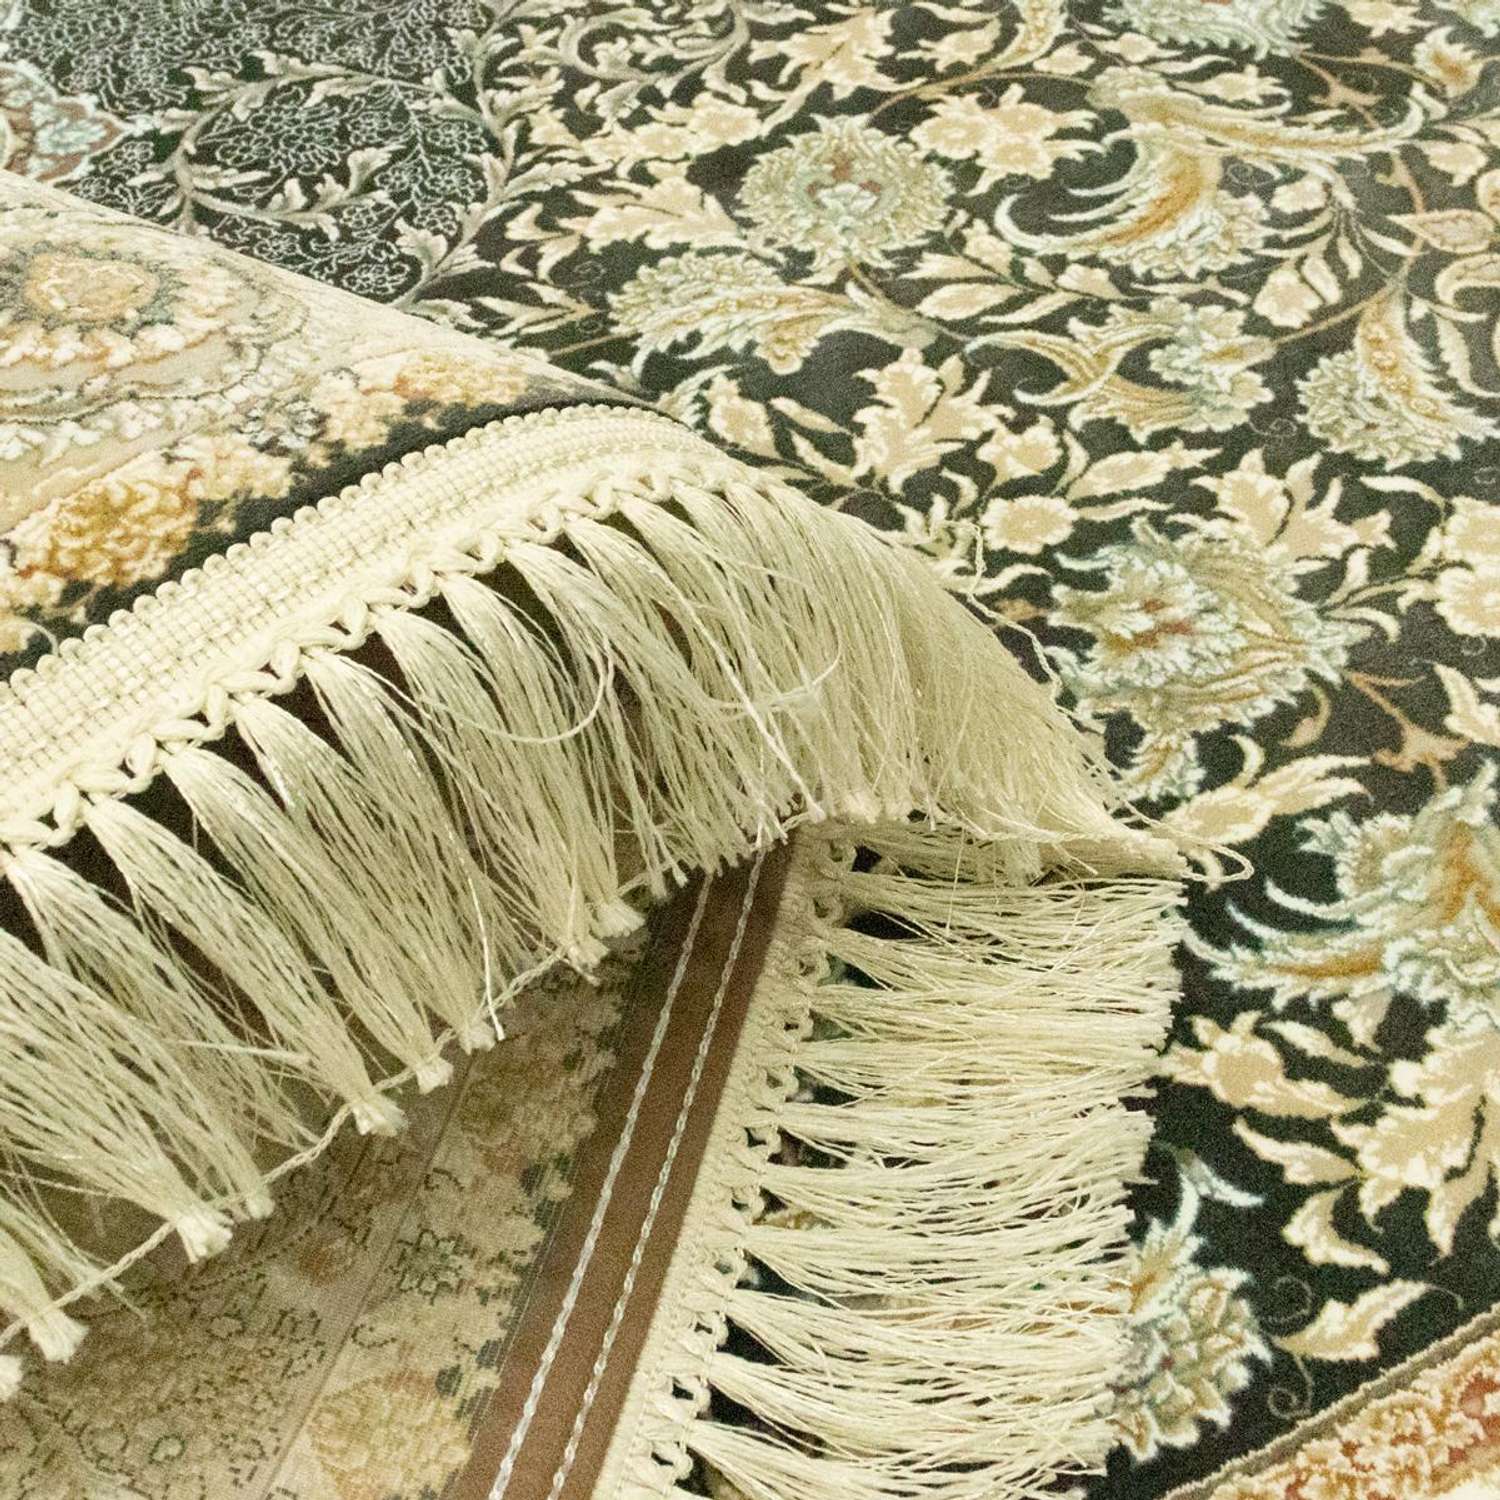 Orientální koberec - Benafscha - oválný